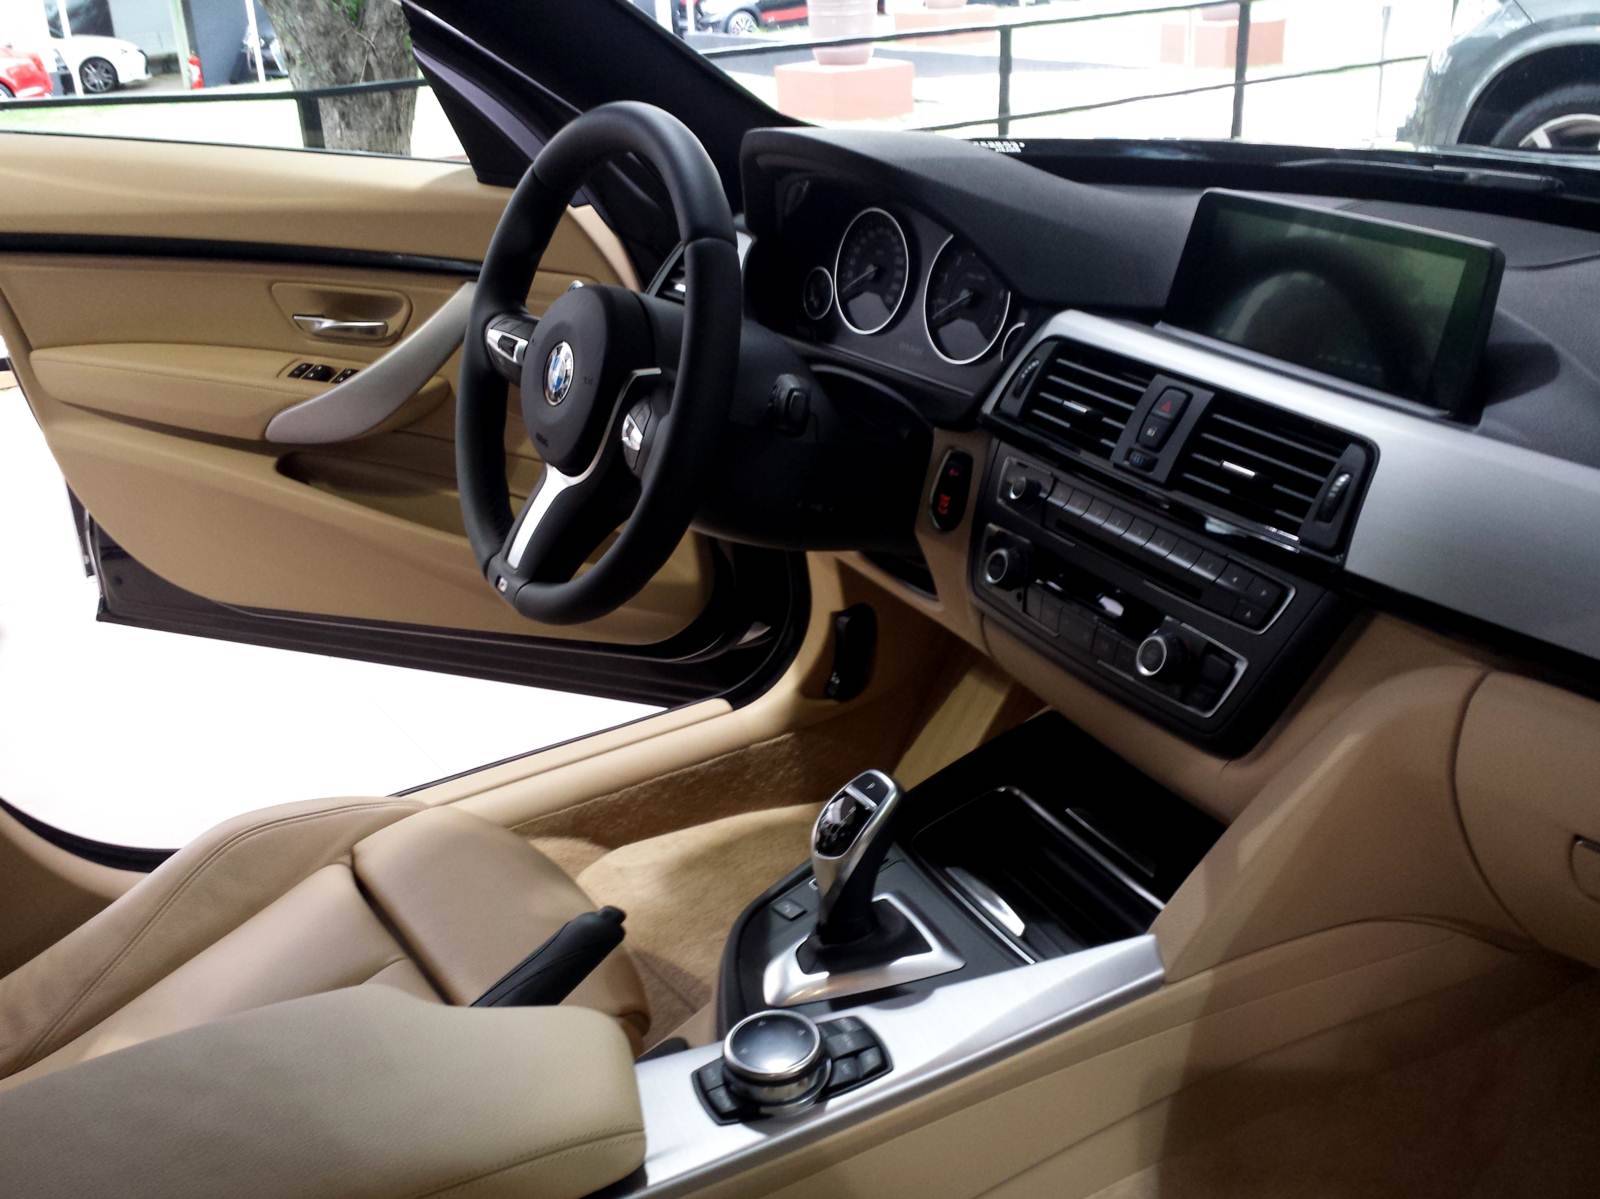 BMW 328i GTI x VW Golf GTI - interior